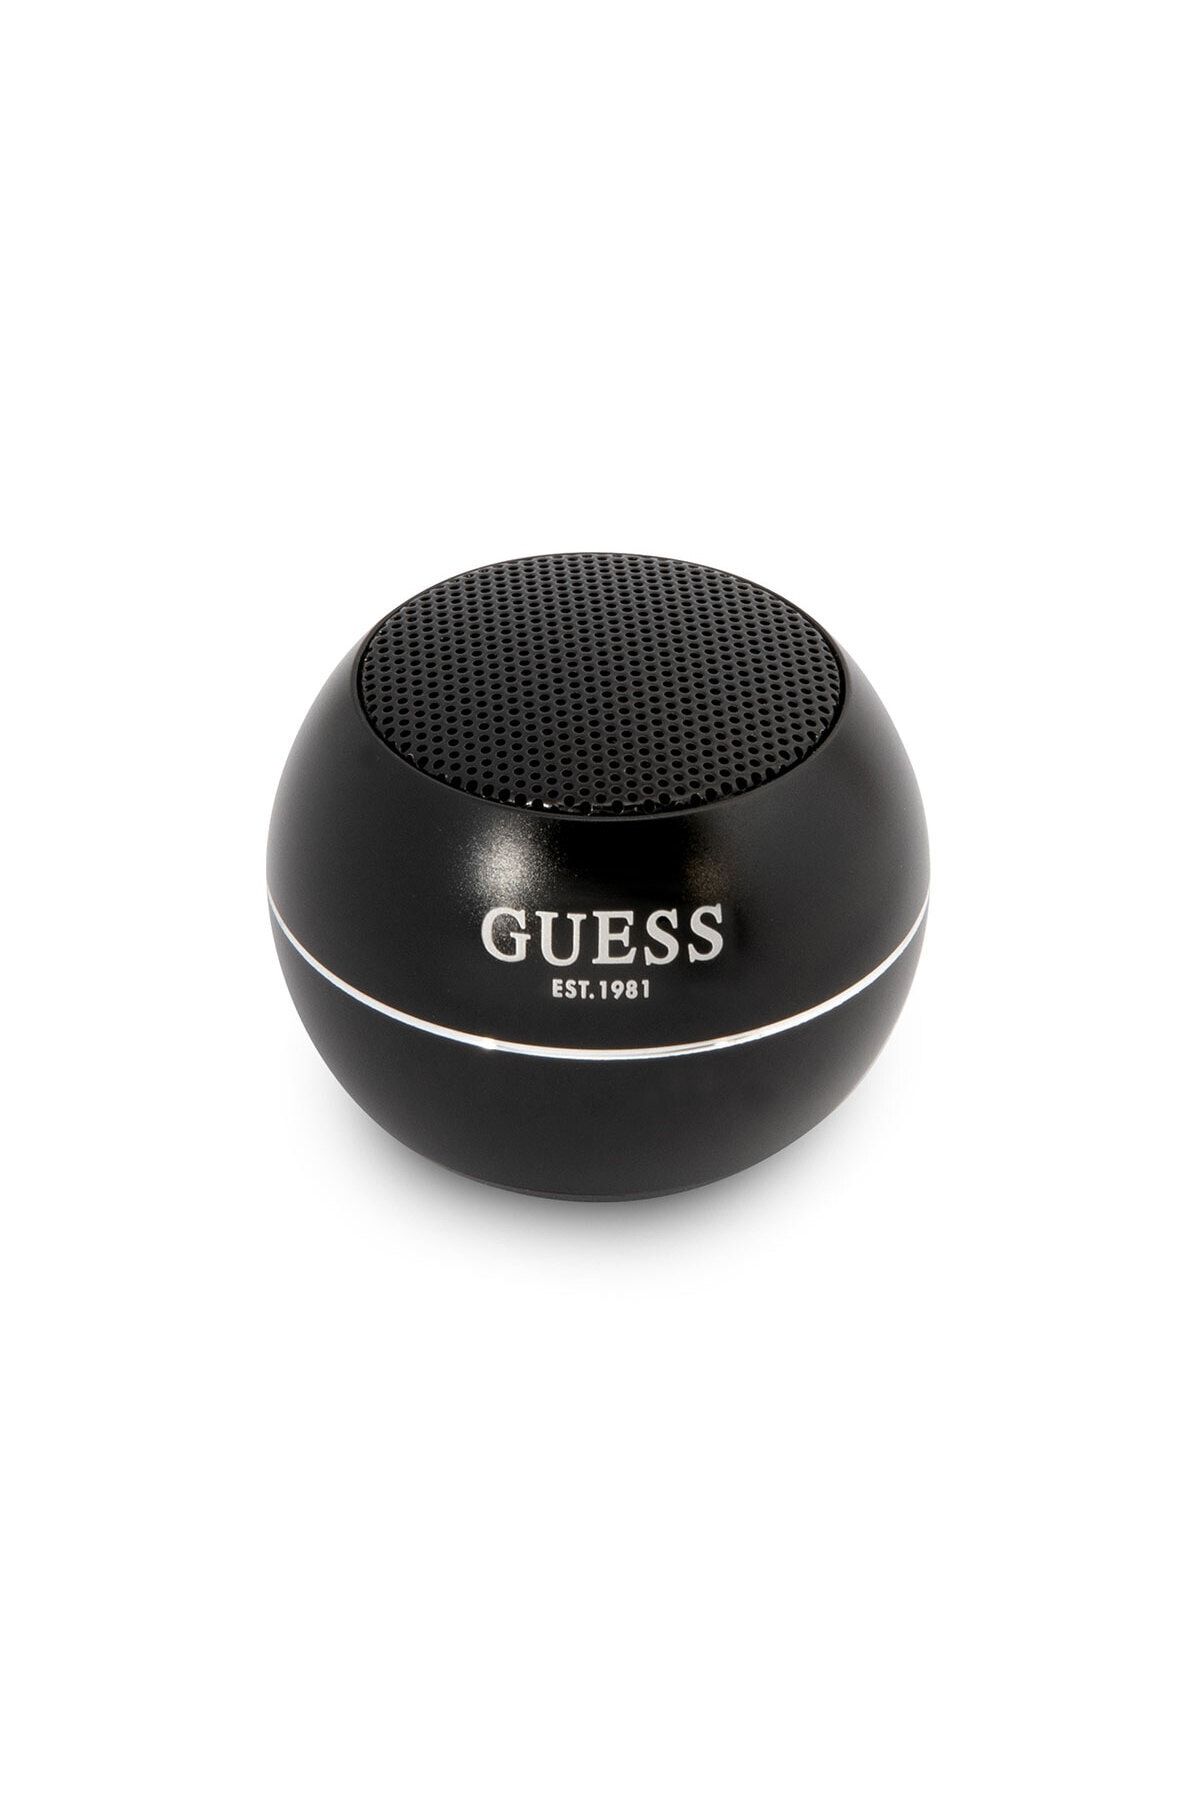 Guess Mini Bluetooth Speaker GUESS Alüminyum Alaşım Gövde Tasarımlı Hoparlör Portable Siyah